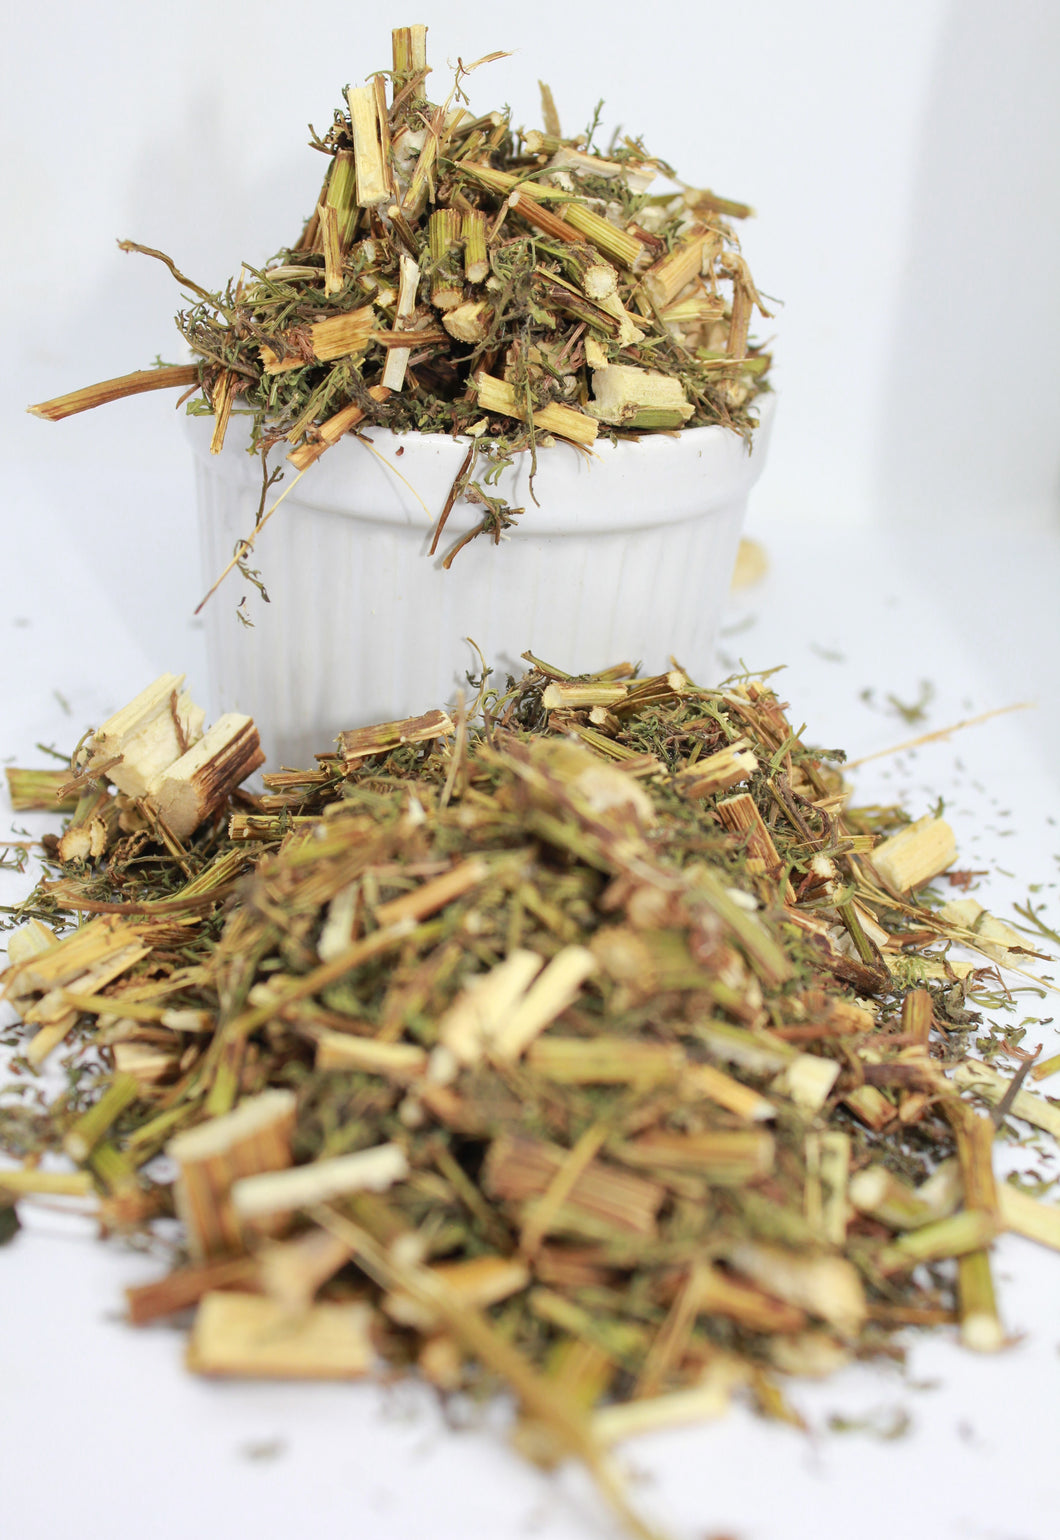 Pure 100% Dried Artemisia Annua Sweet Annie Wormwood Tea Medicinal Herb 1kg 500g